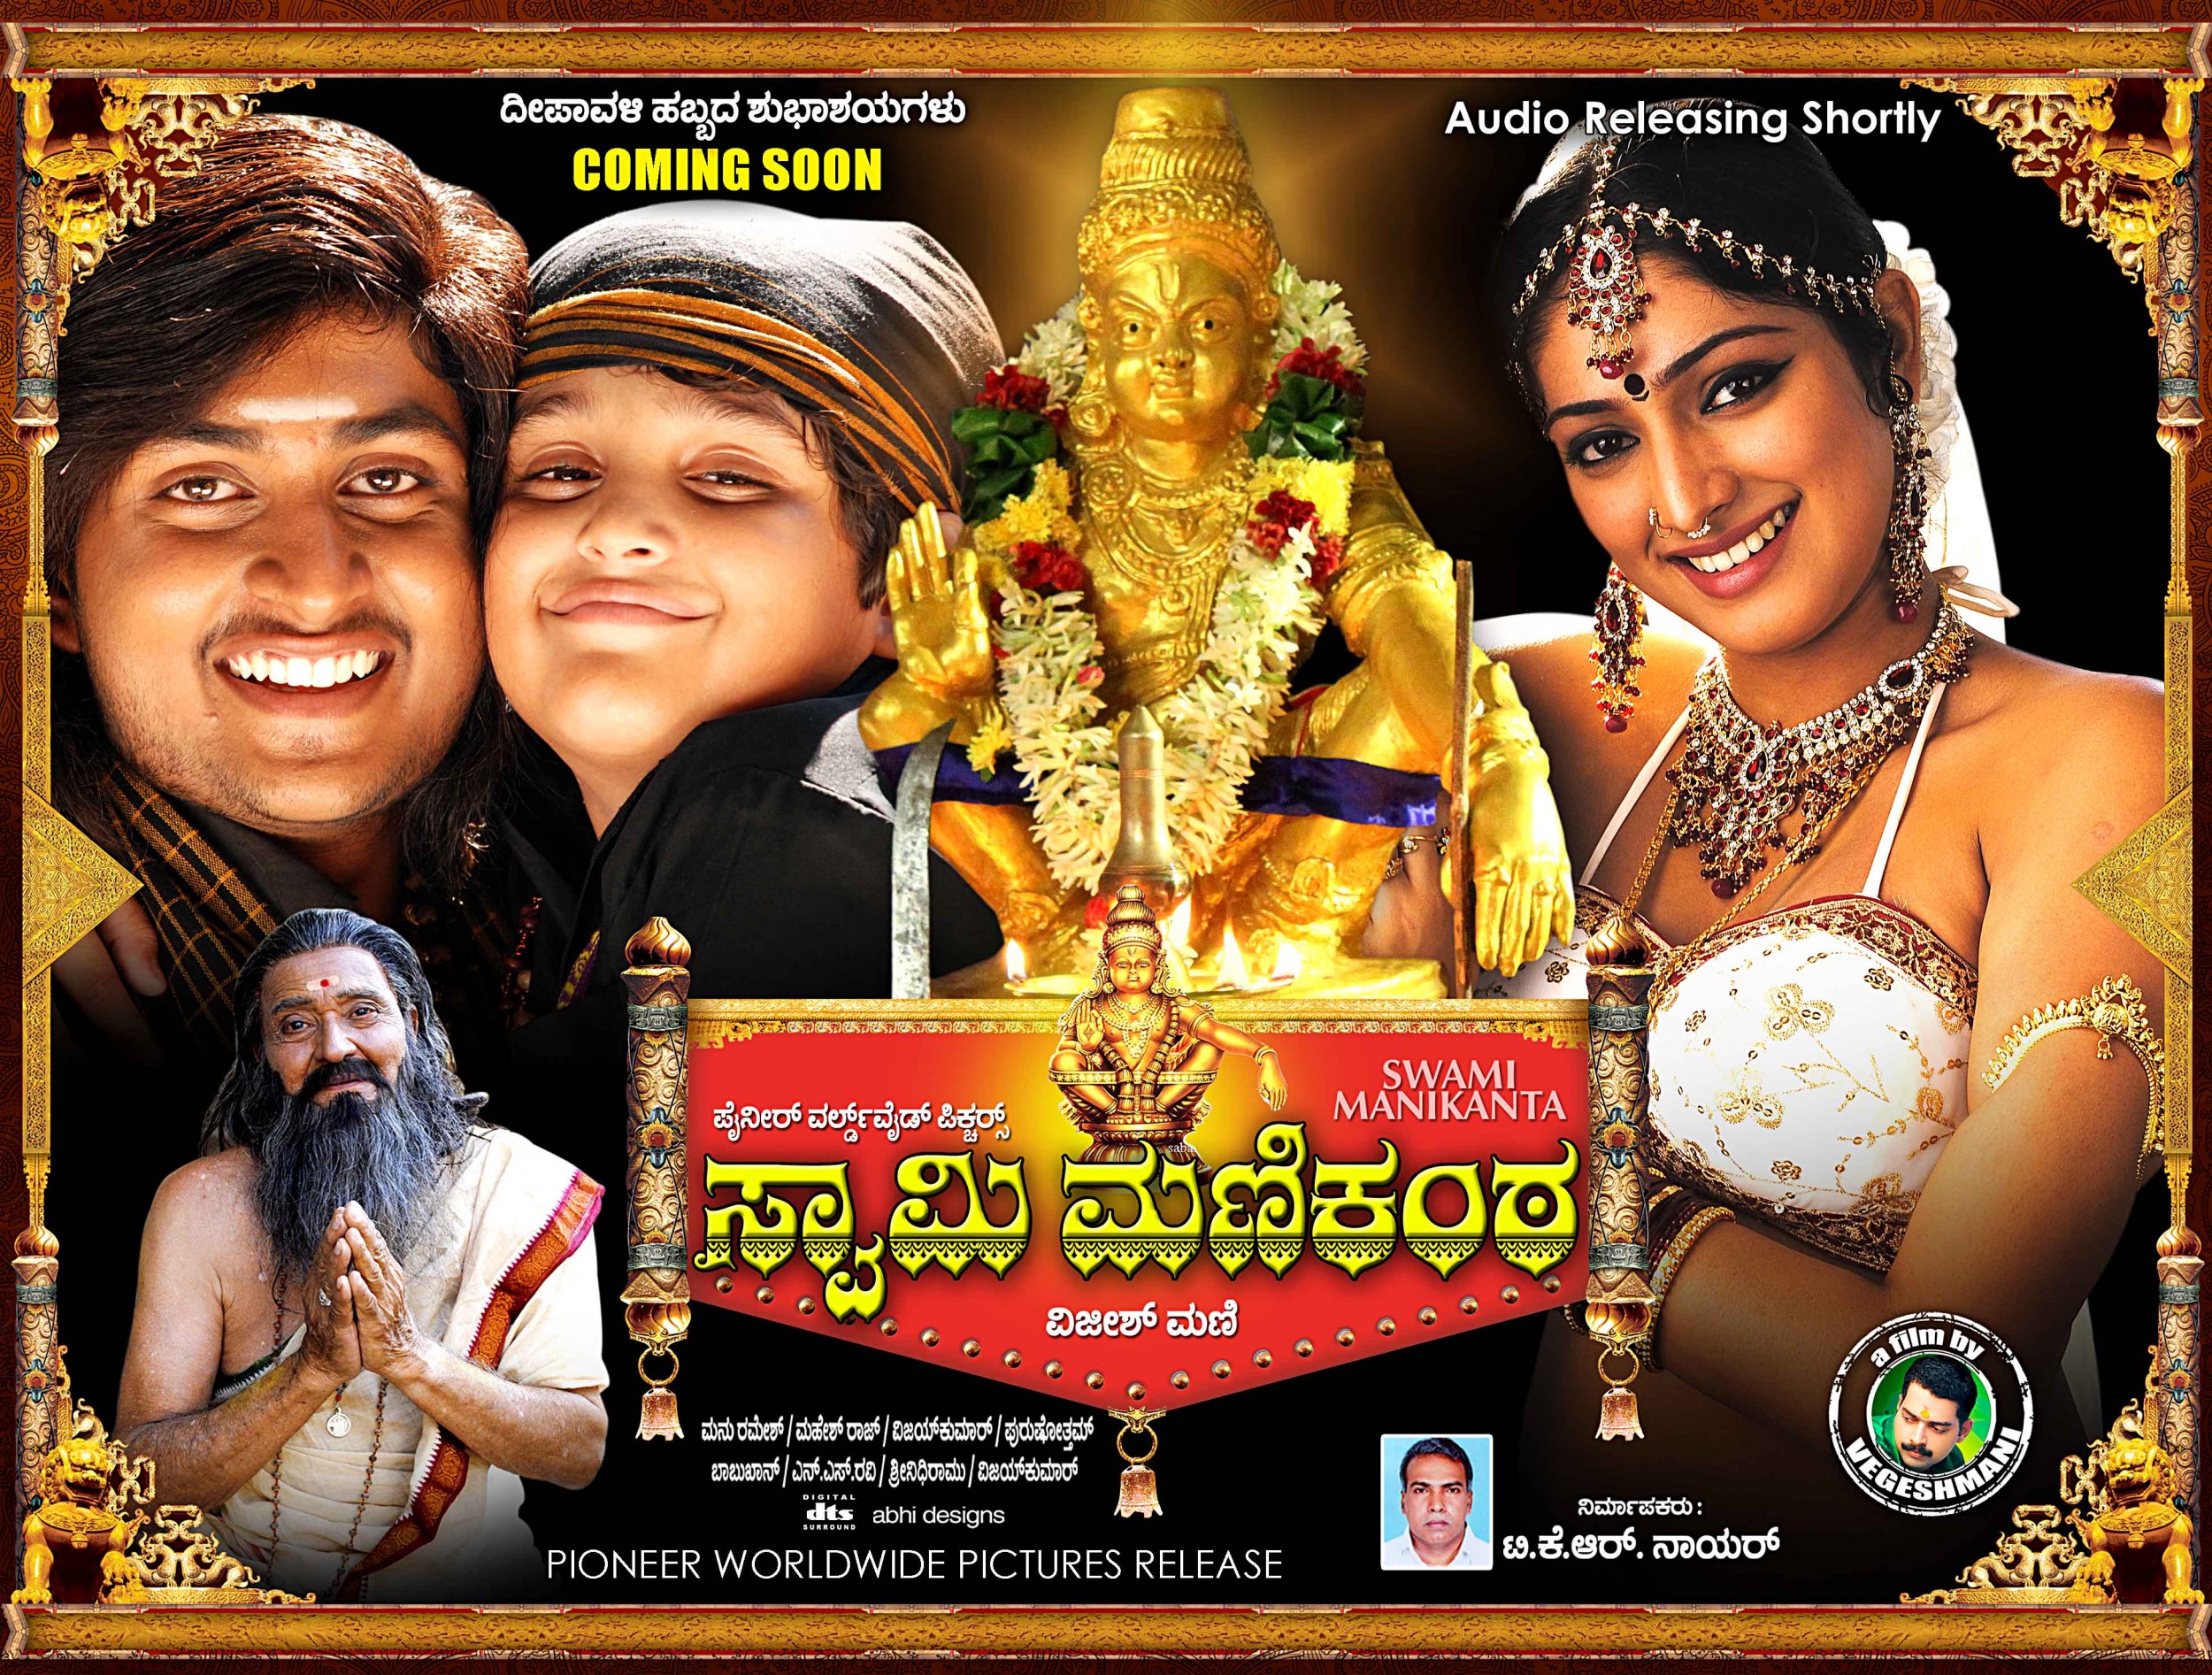 Mega Sized Movie Poster Image for Swami Manikanta 